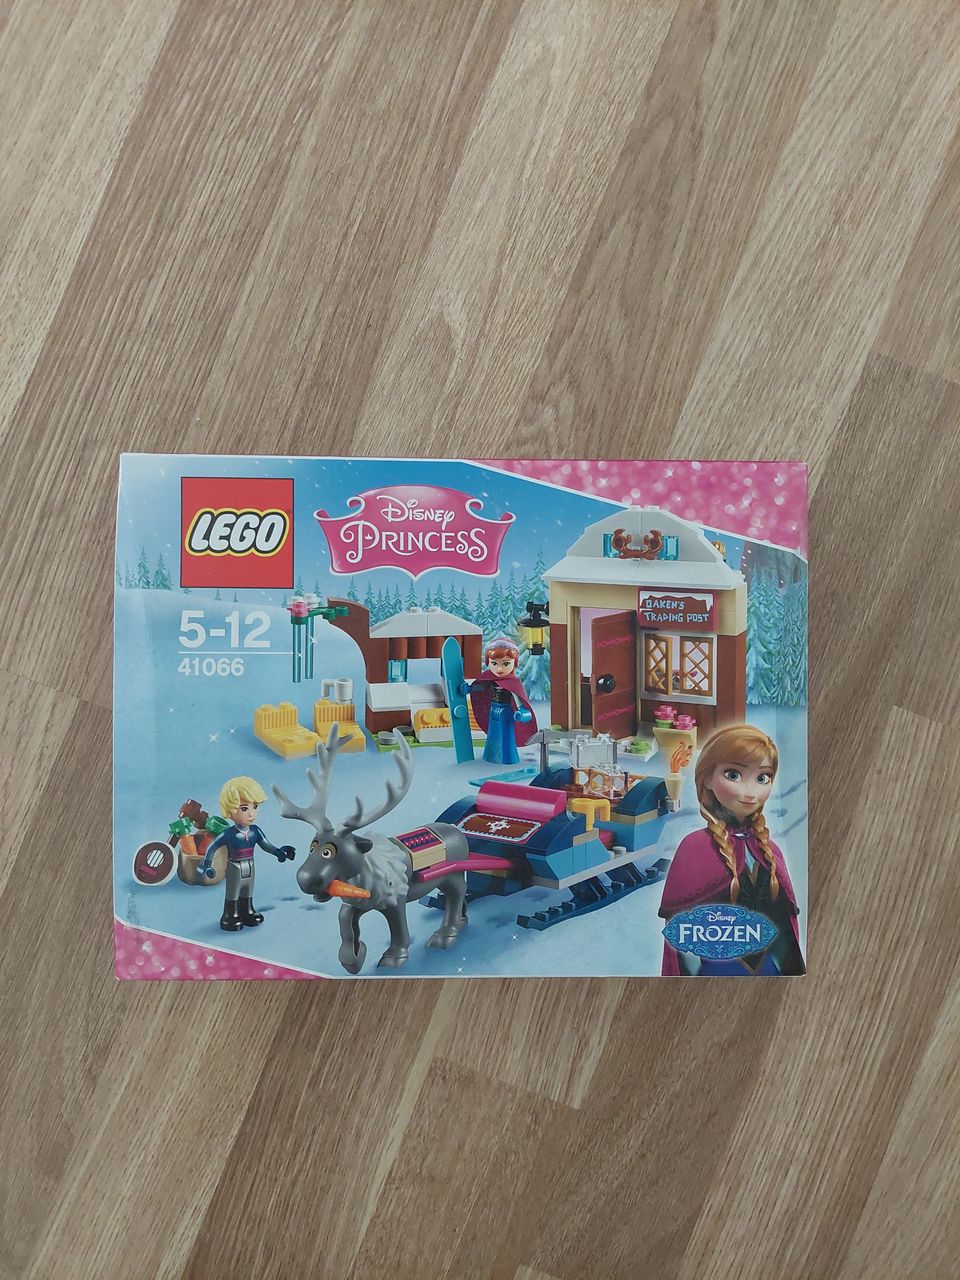 Uusi Lego Princess-paketti 41066